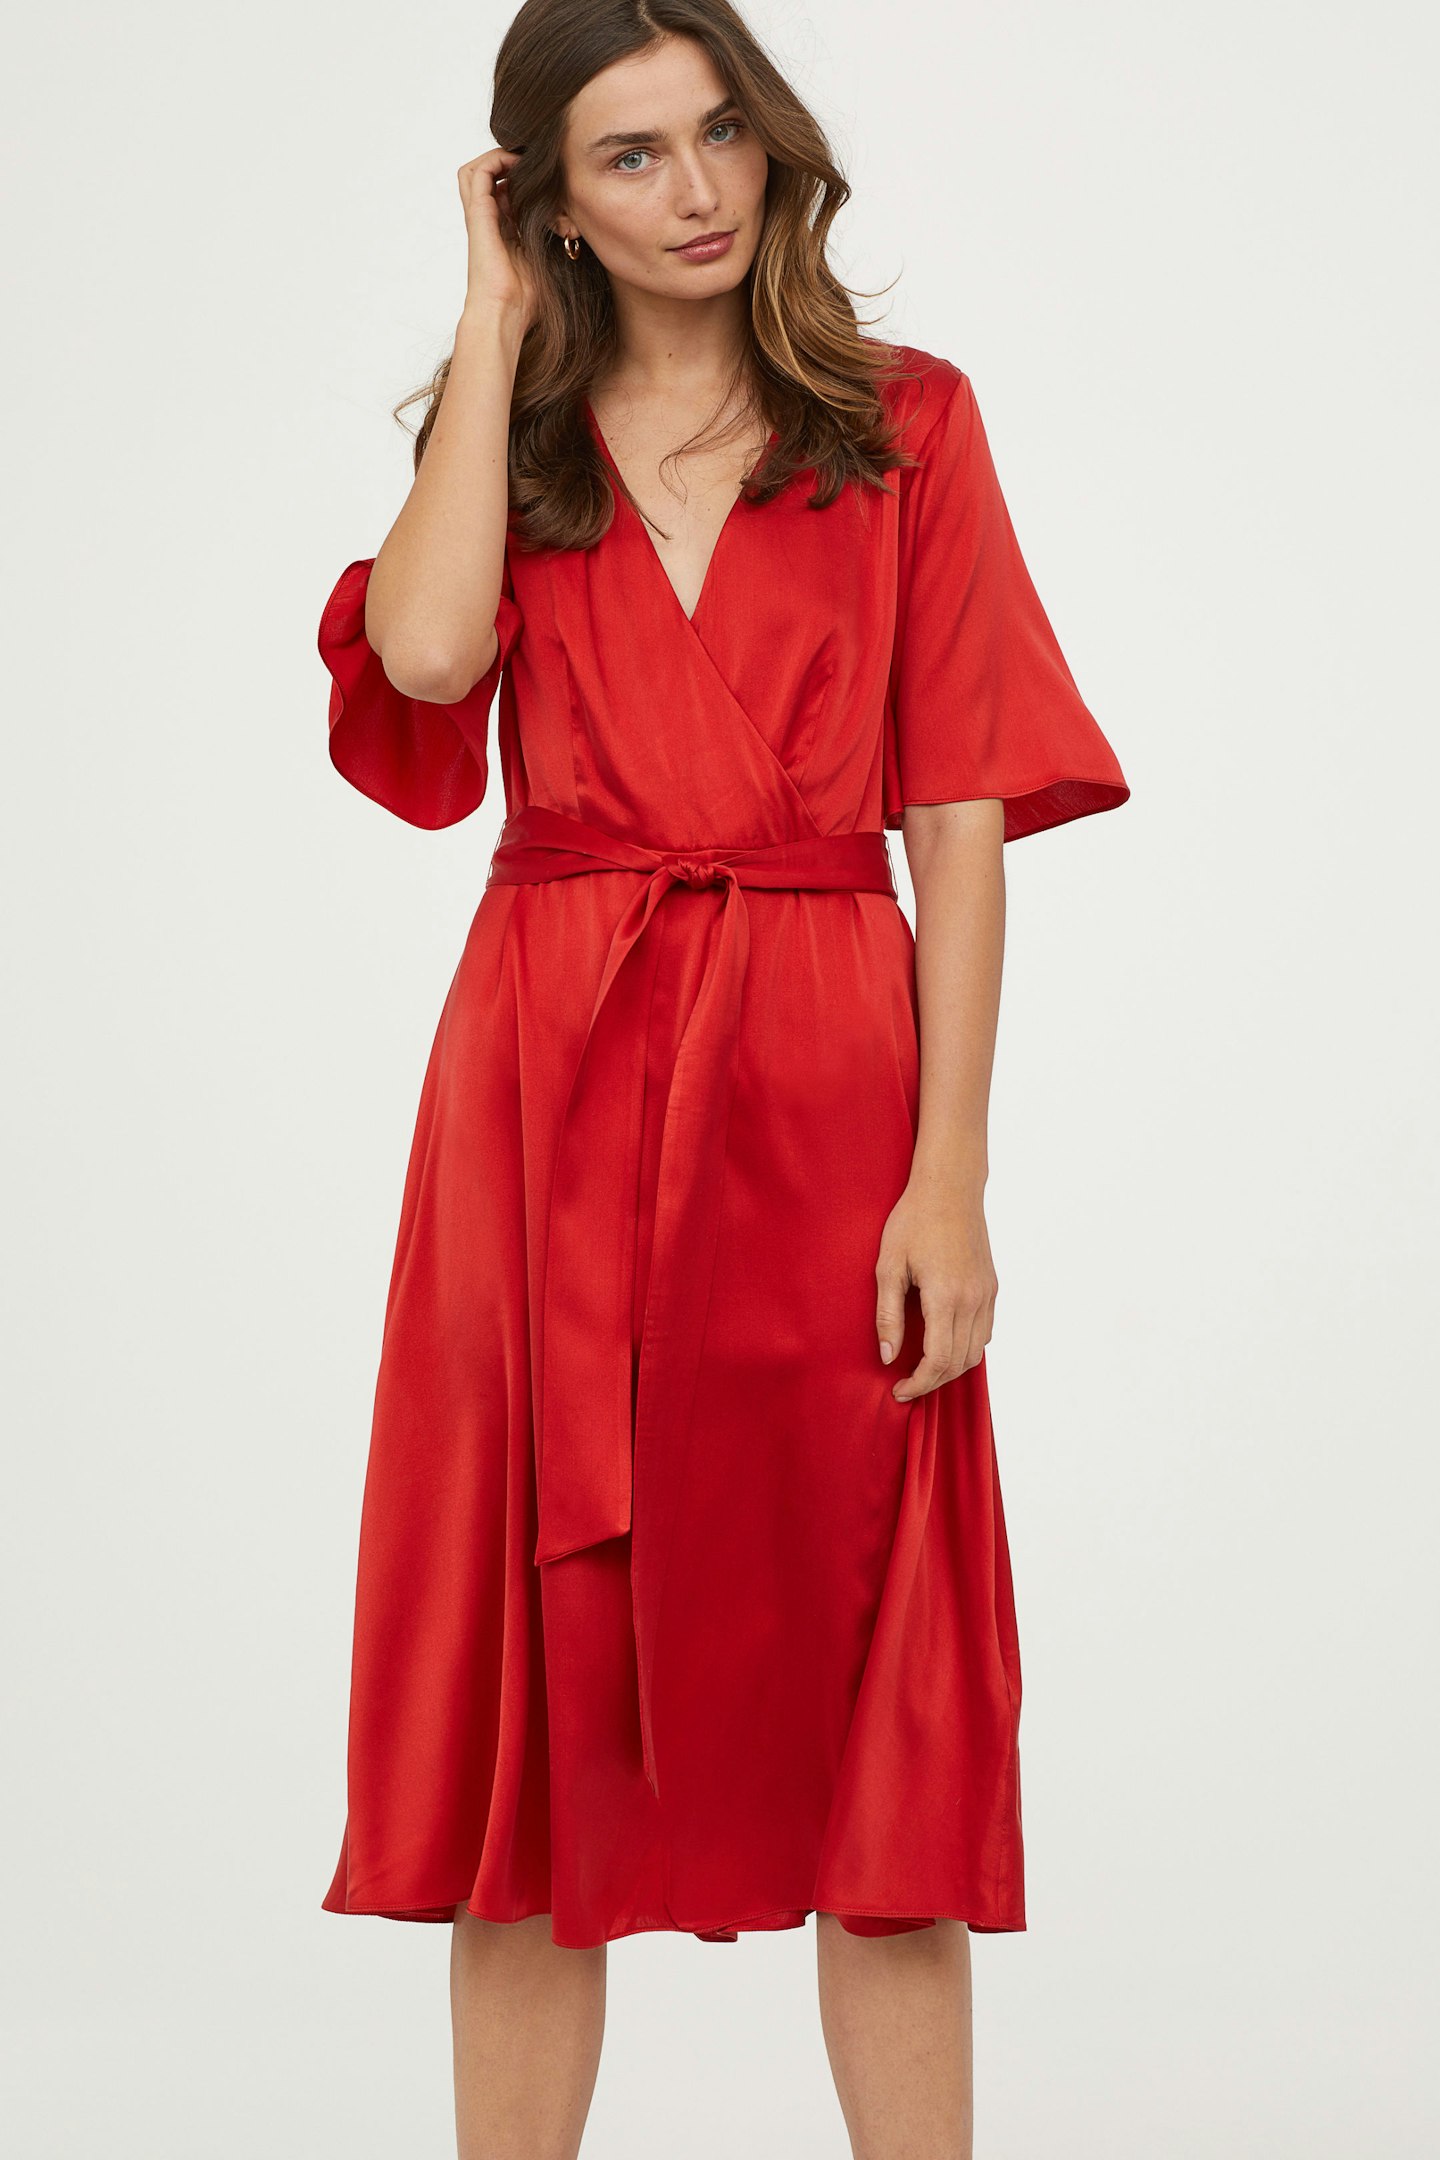 H&M Premium Red V-Neck Silk Dress